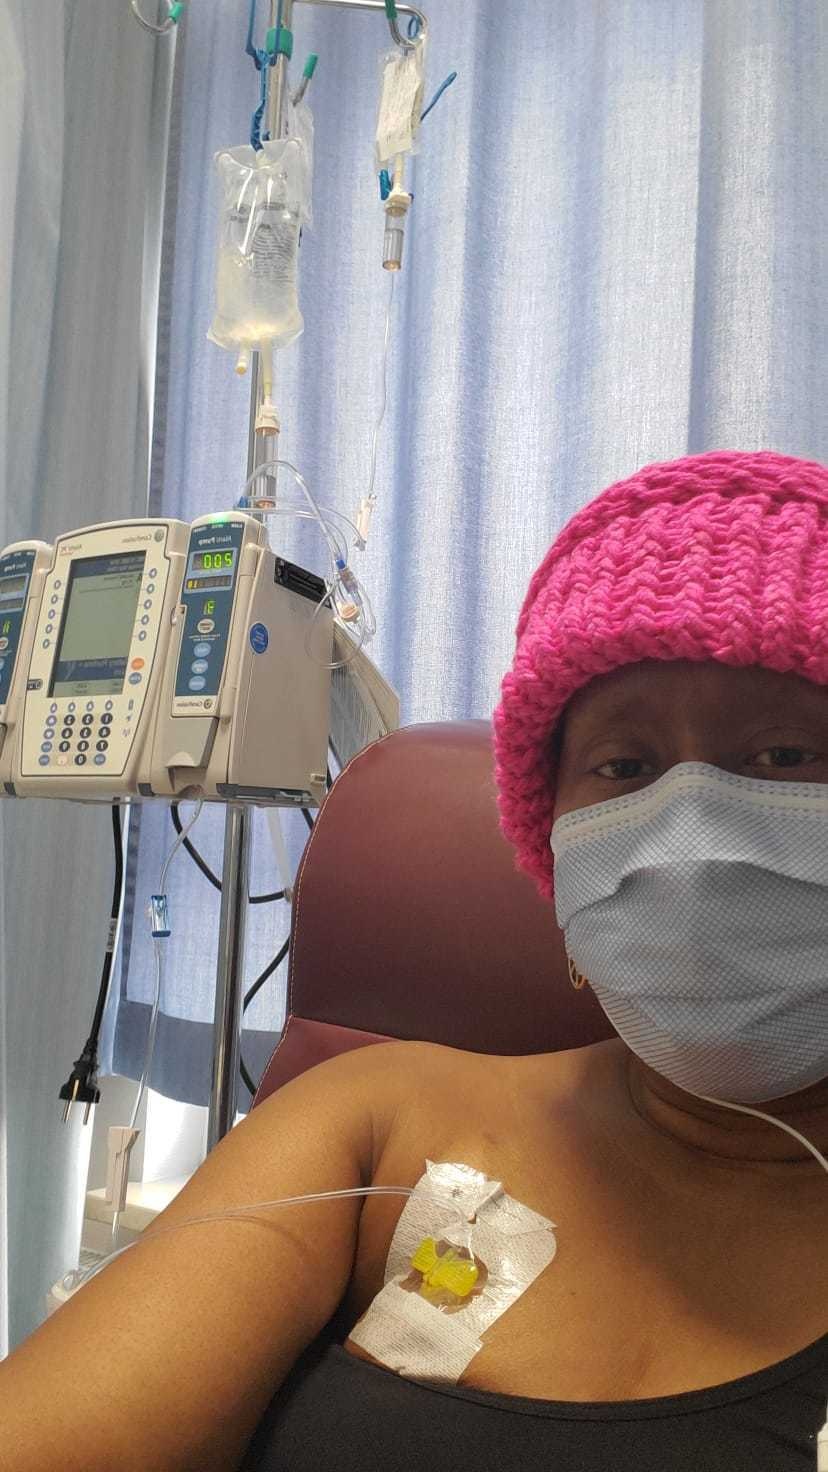 Breast cancer survivor shows strength through adversity